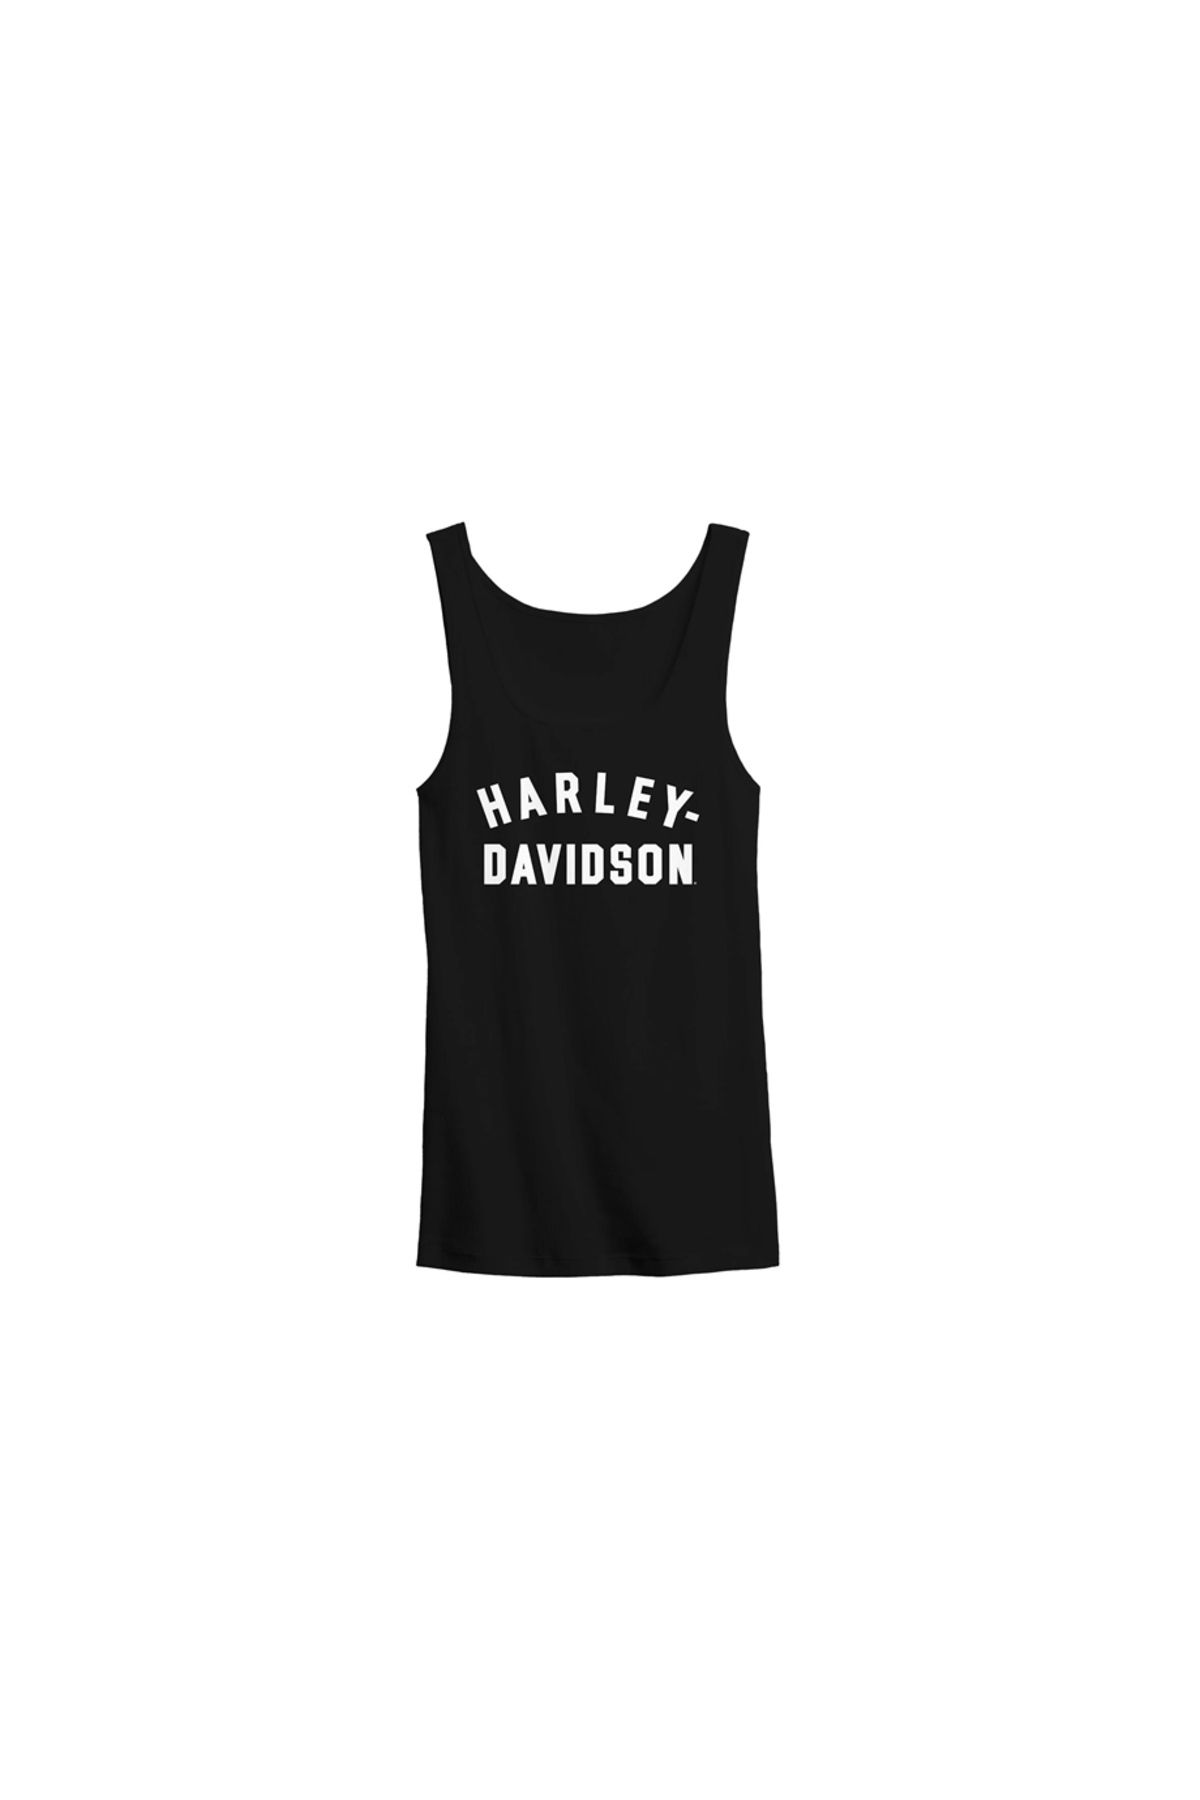 Harley Davidson Harley-davidson Women's Ultra Classic Racer Font Tank - Black Beauty